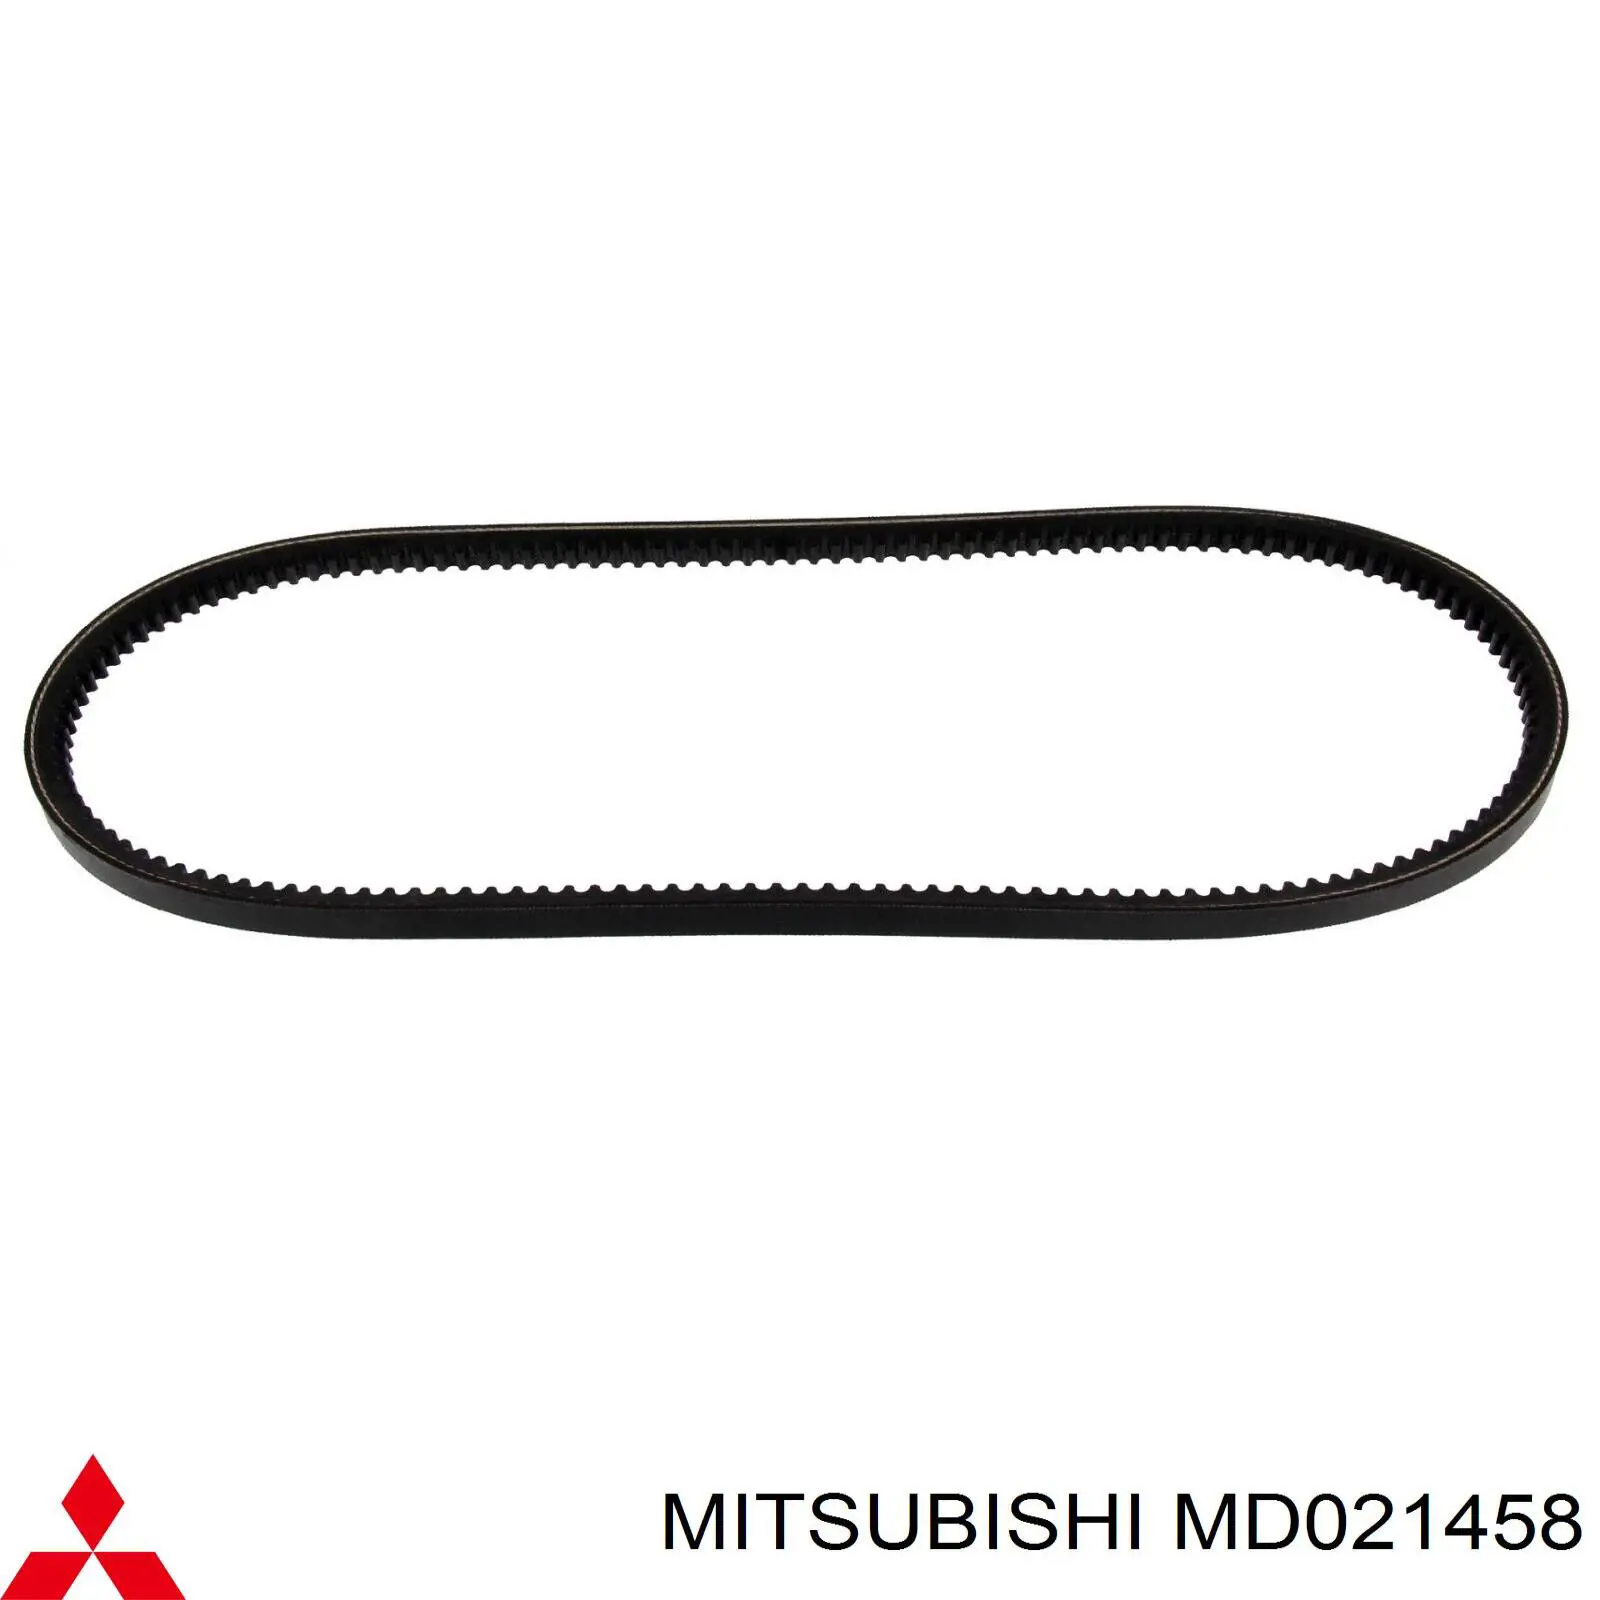 MD021458 Mitsubishi ремень генератора